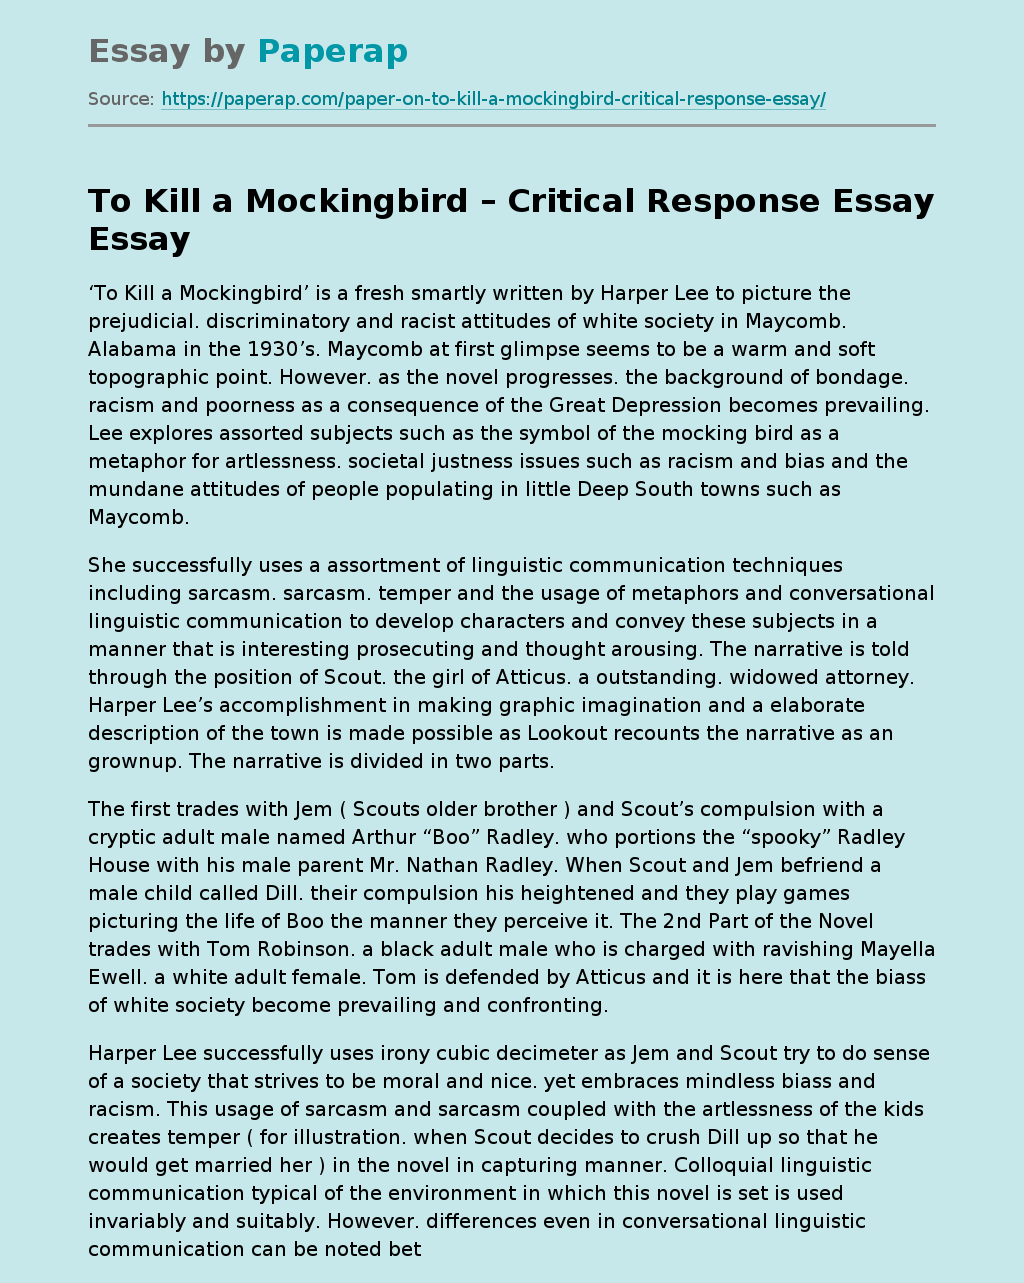 To Kill a Mockingbird Critical Response Essay